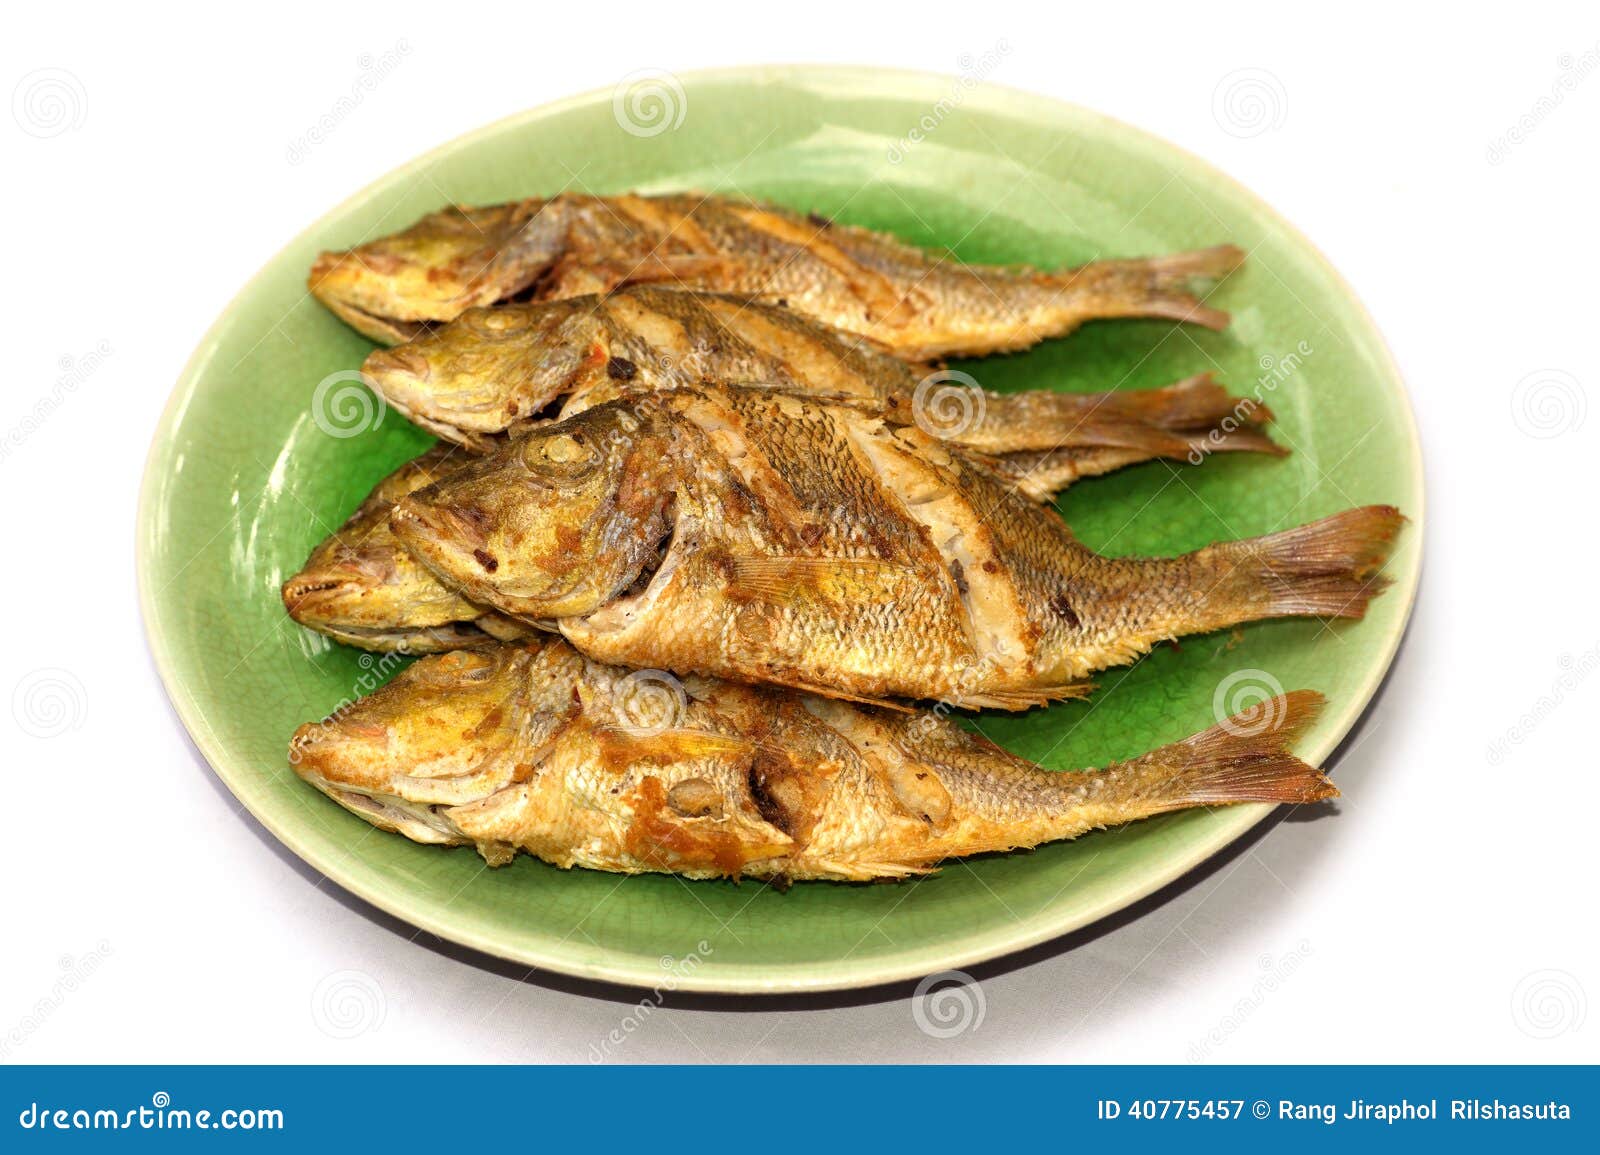 fried fish on white background.